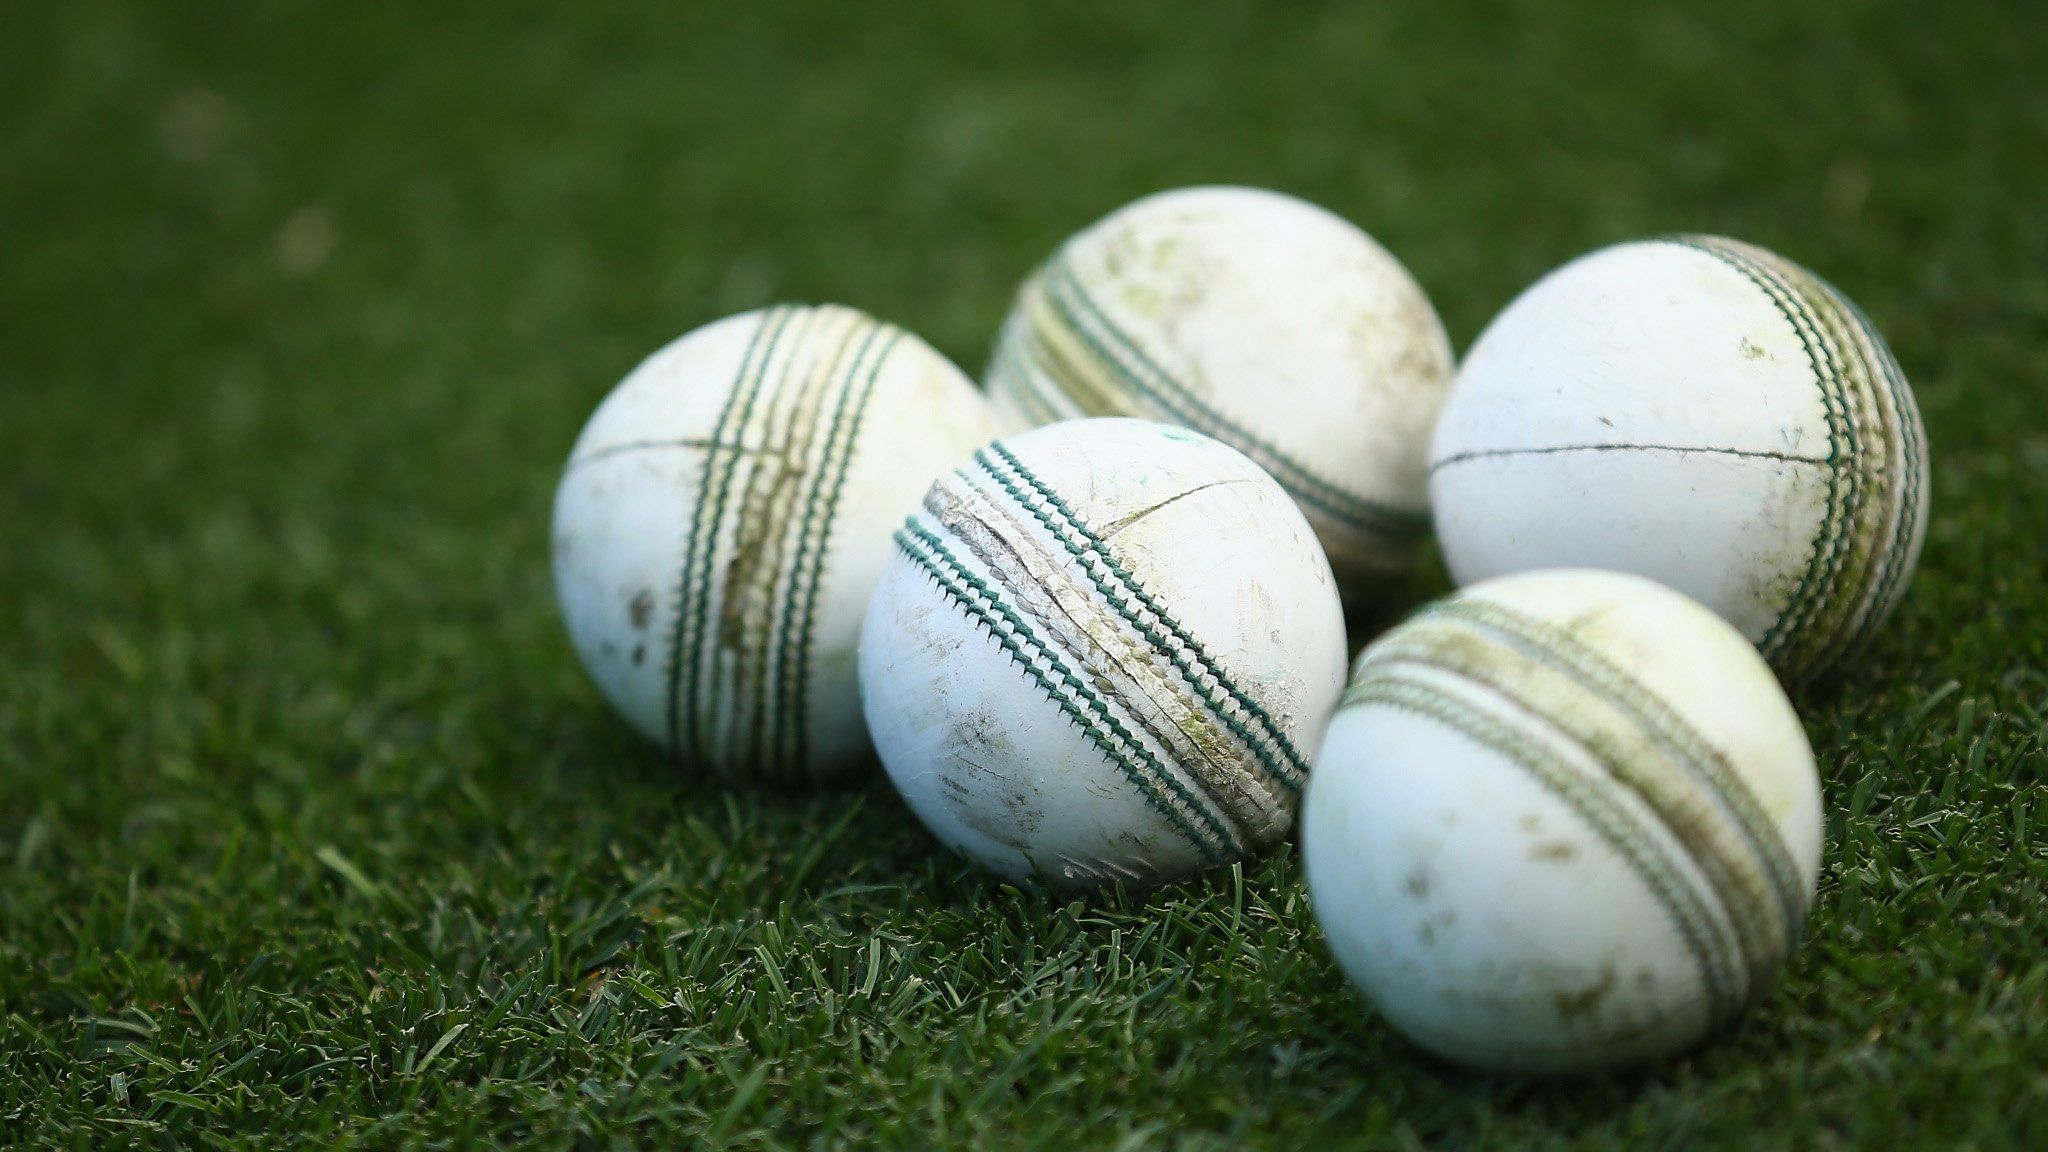 A stock image of white cricket balls